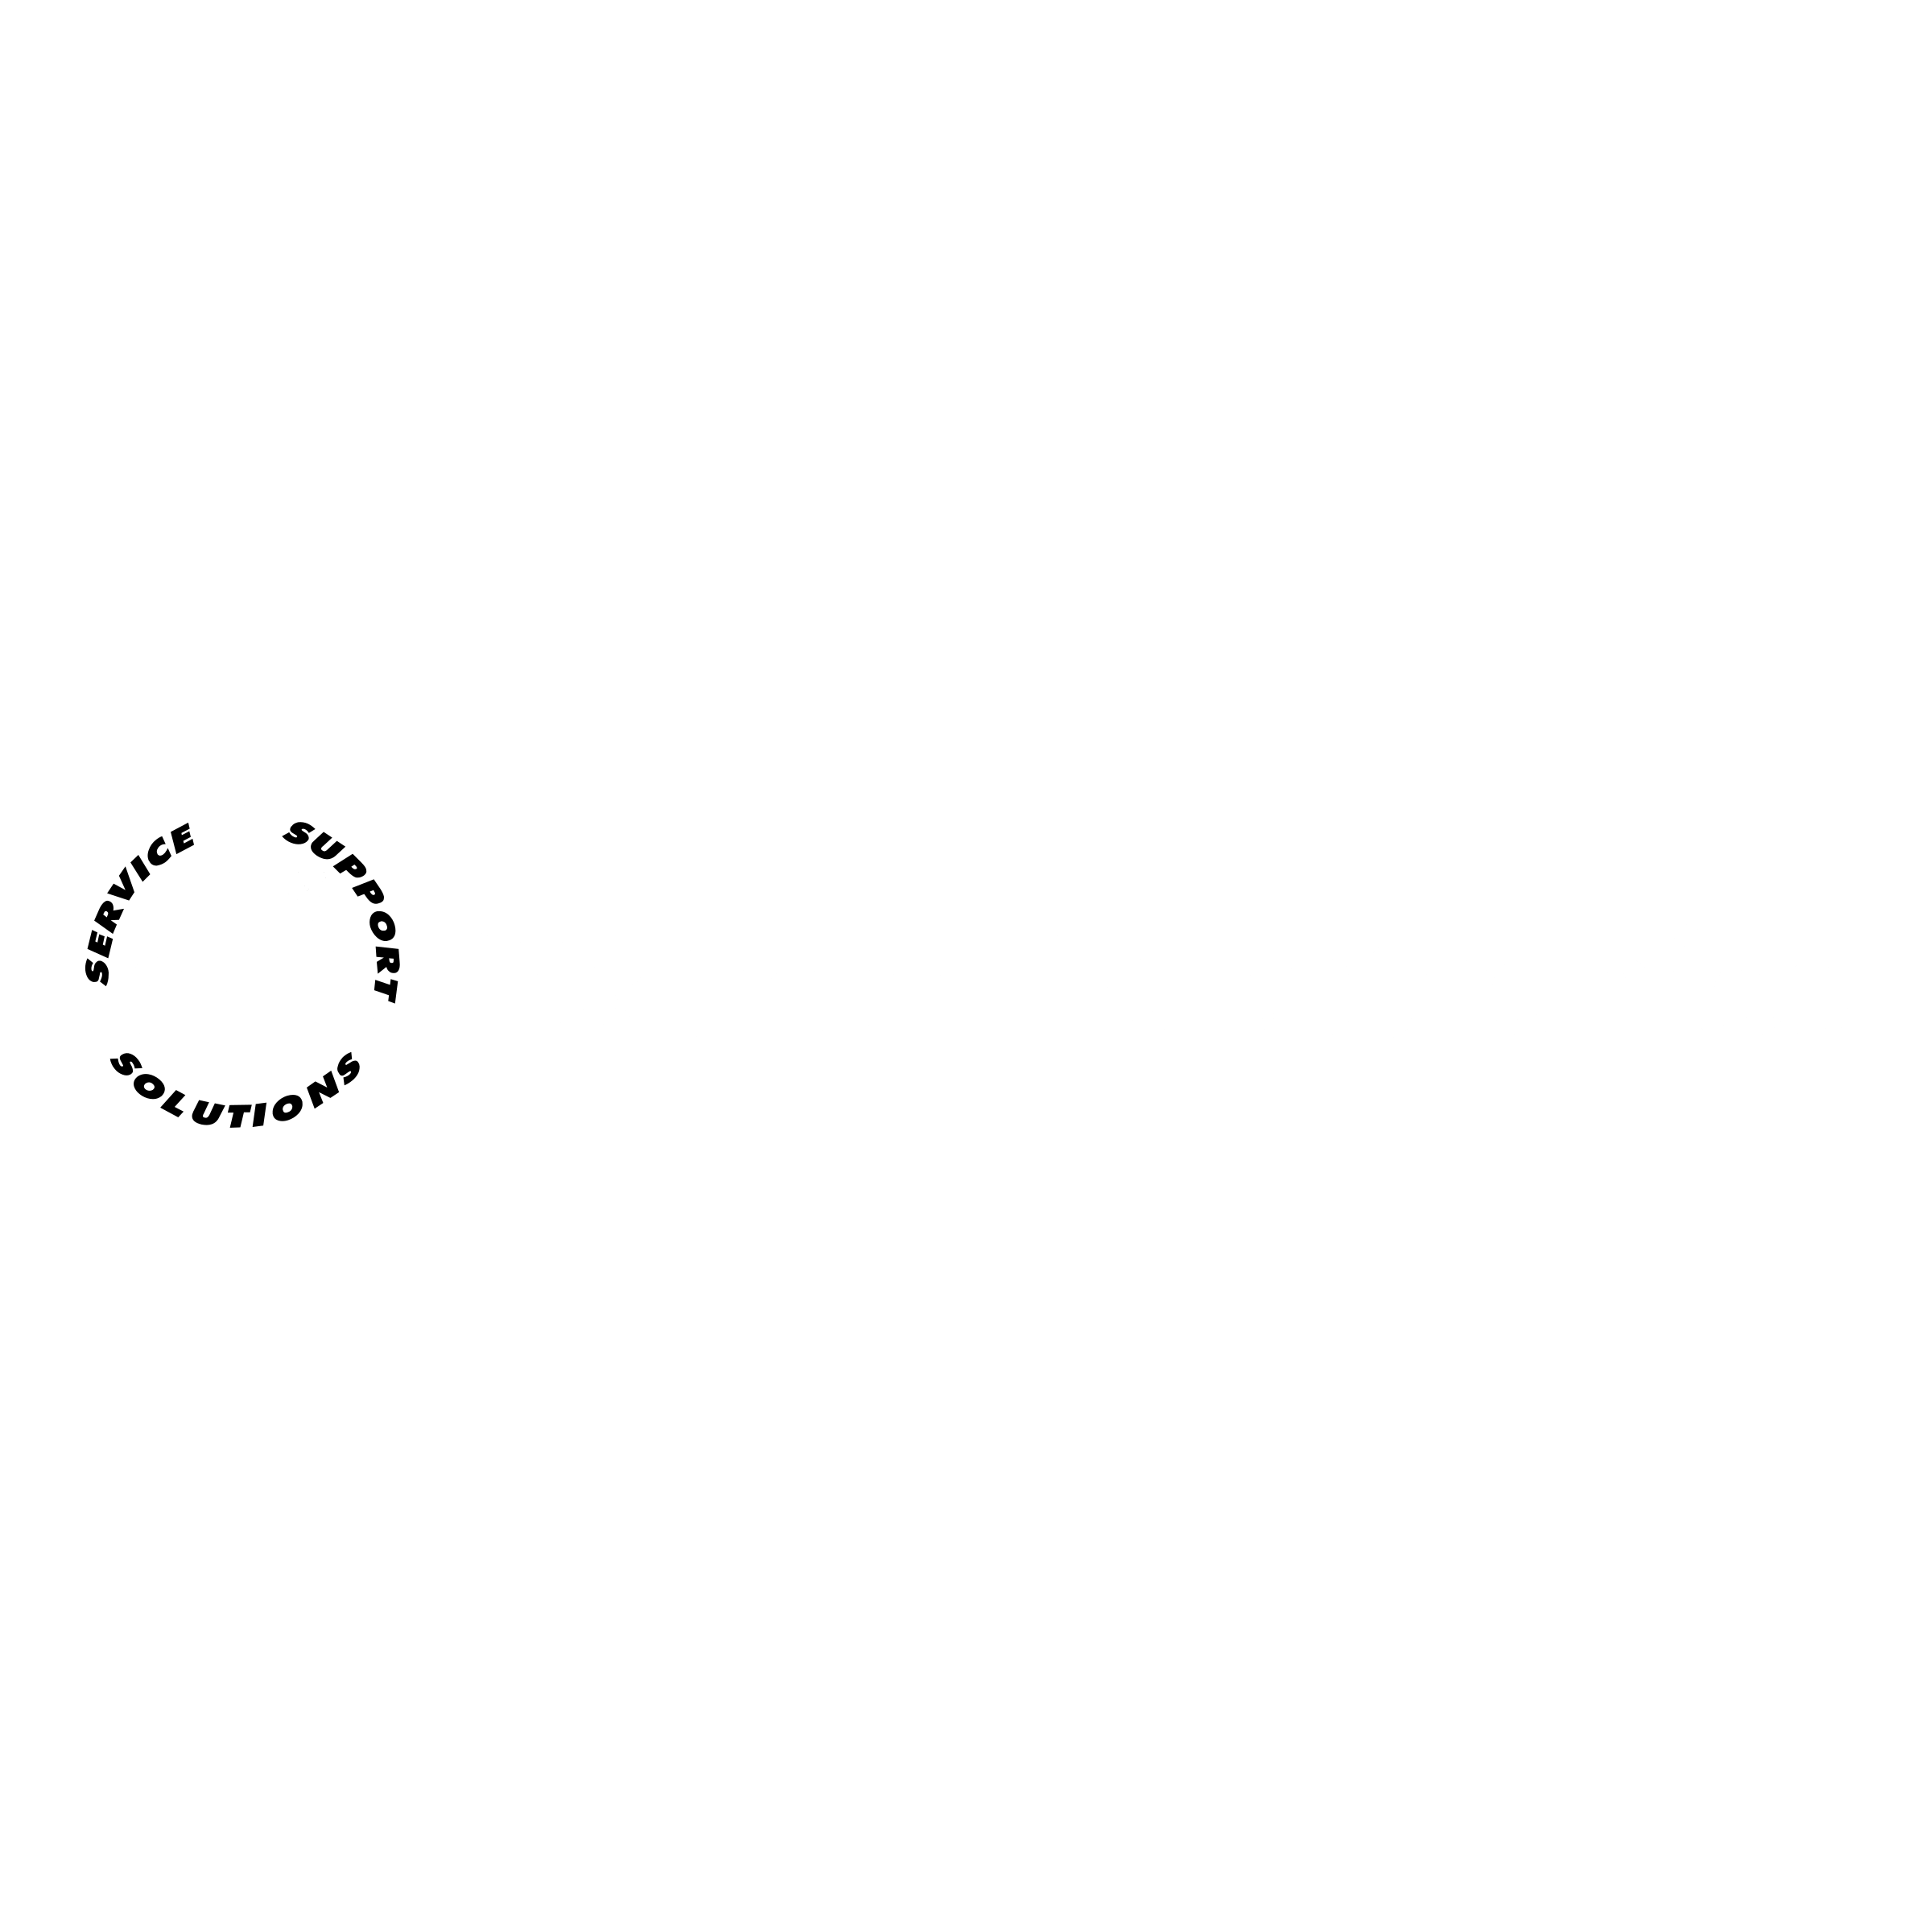 Extron Logo - Extron Electronics Logo PNG Transparent & SVG Vector - Freebie Supply